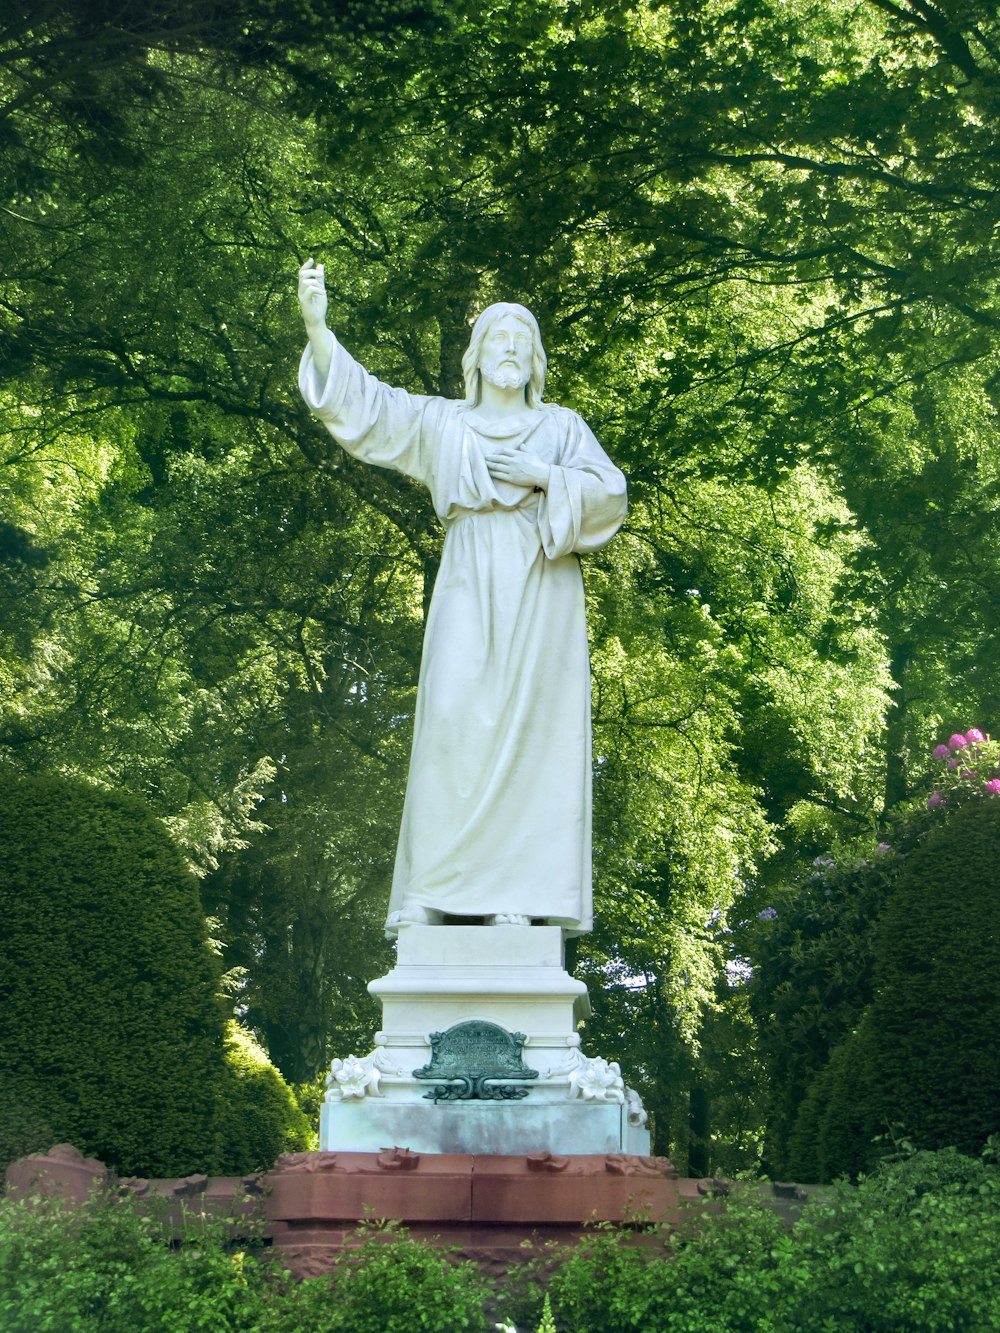 Jesus Christ statue in forest